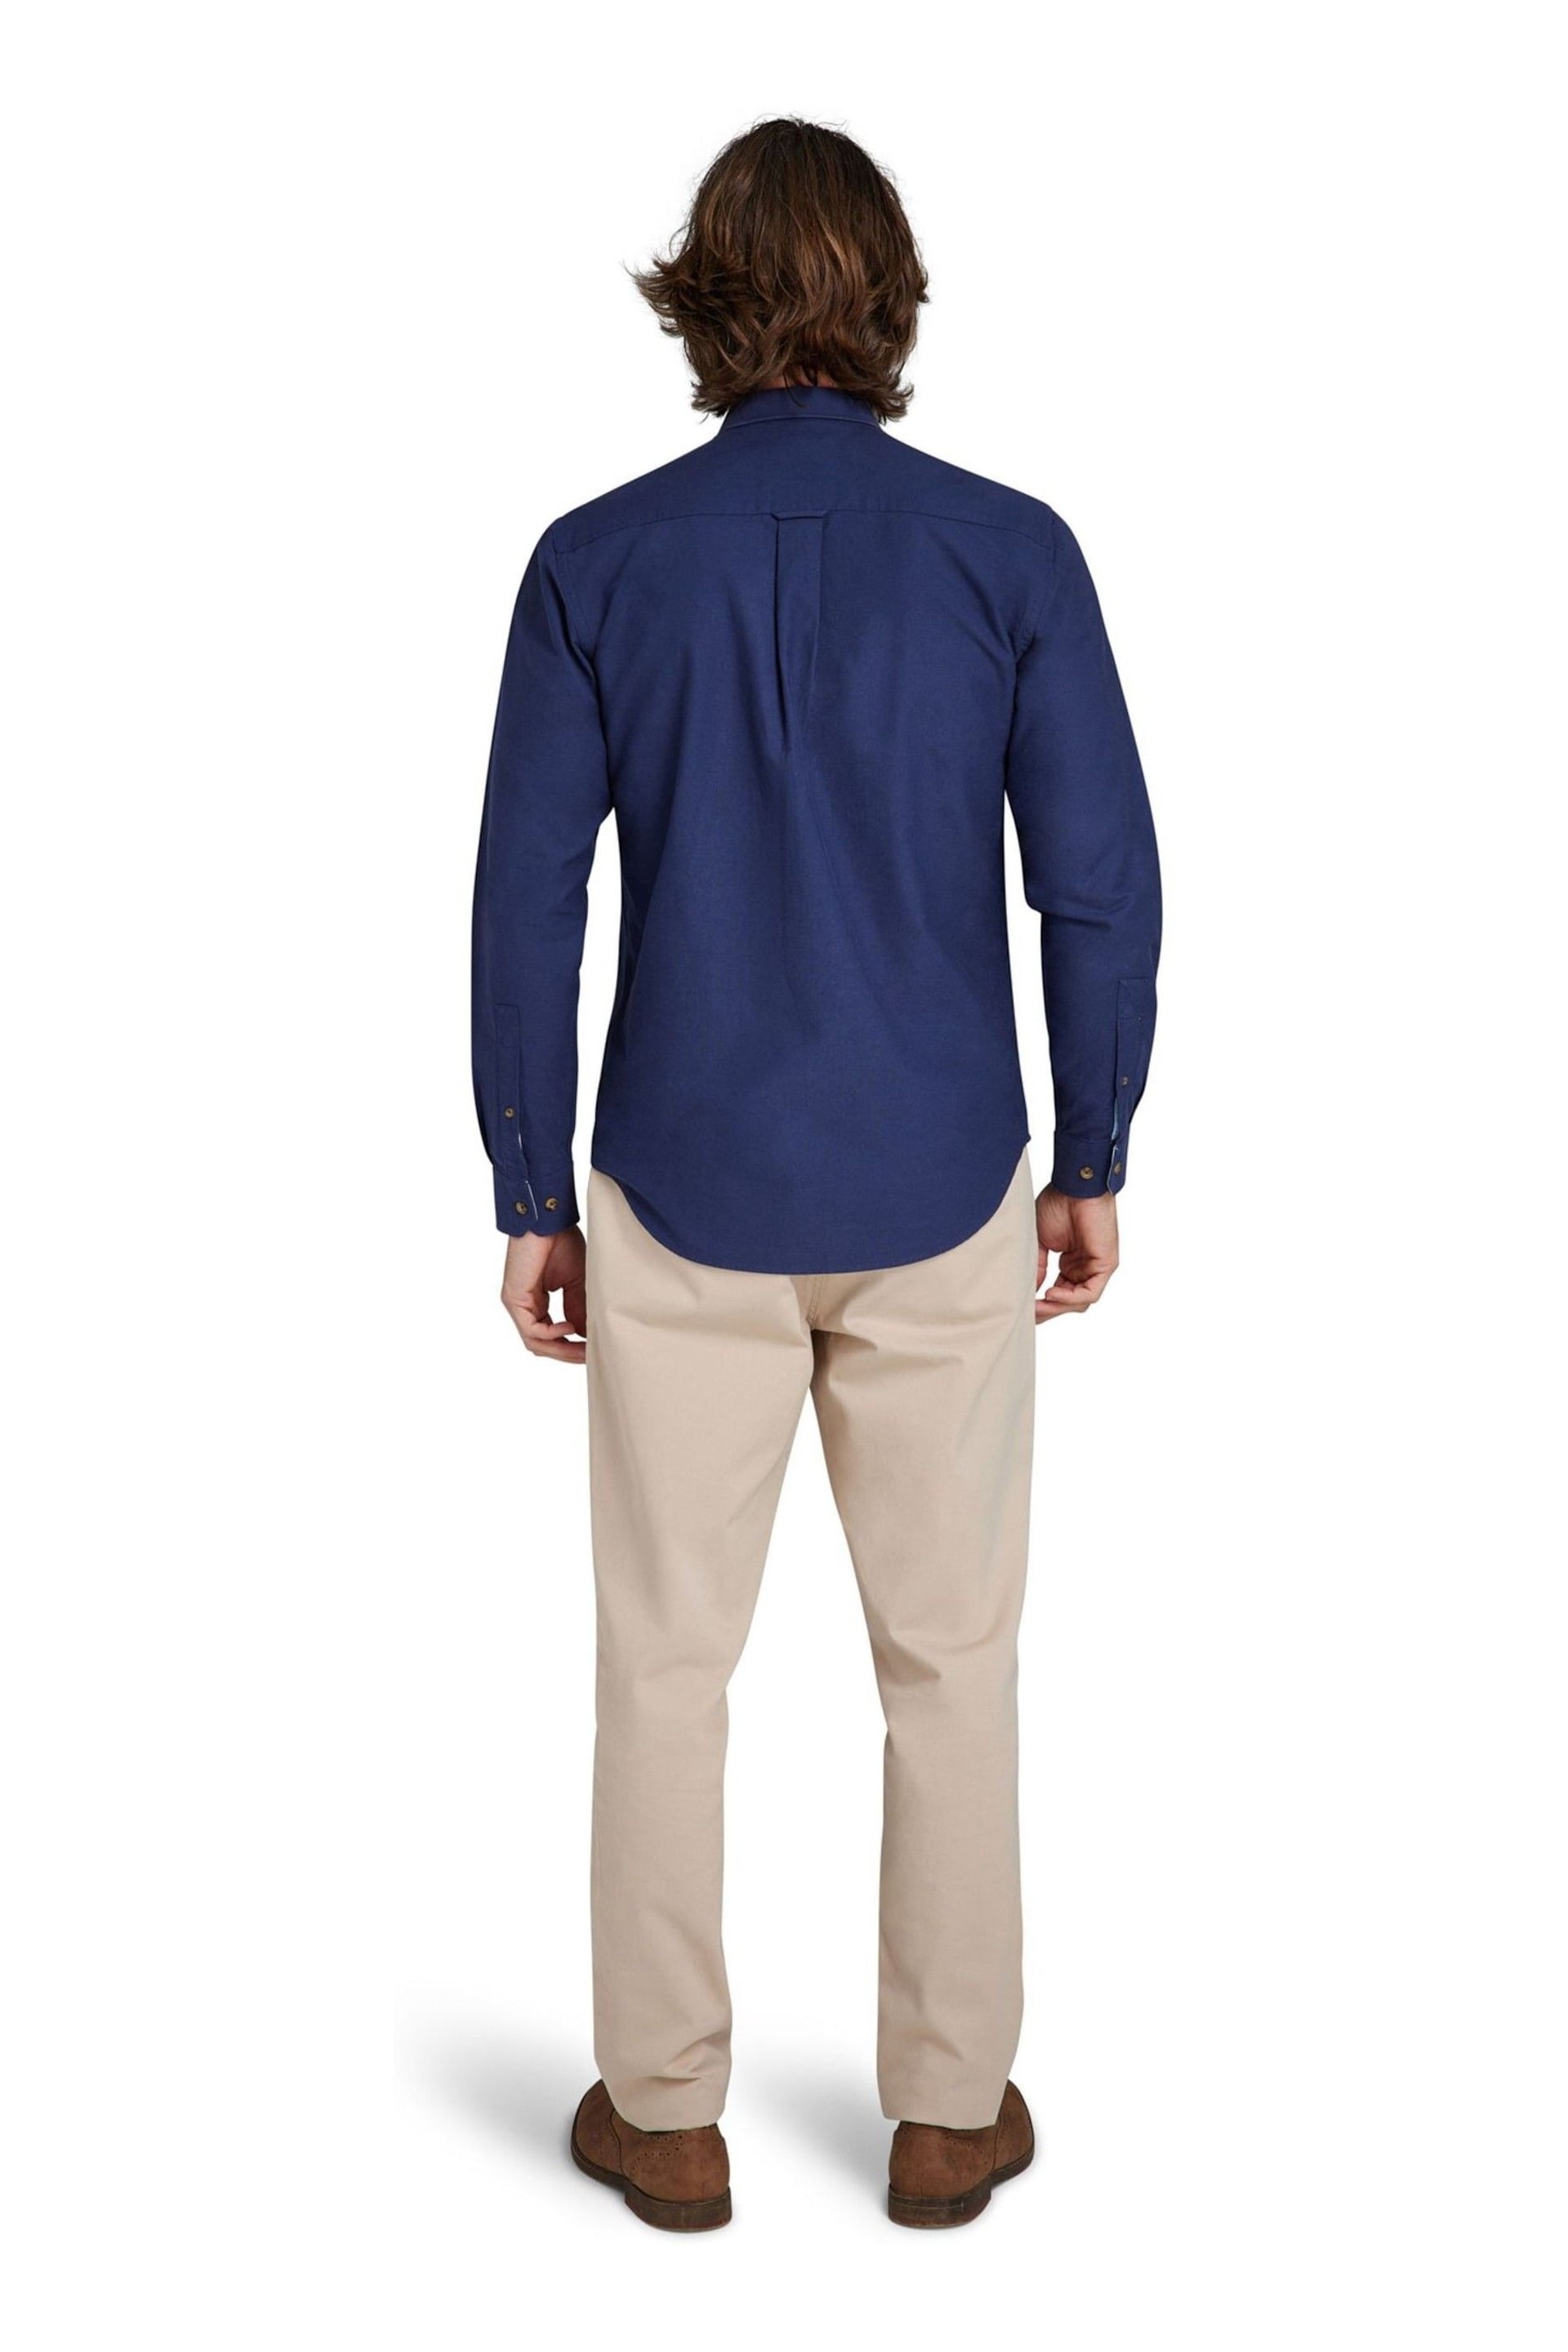 Raging Bull Blue Classic Long Sleeve Oxford Shirt - Image 2 of 6